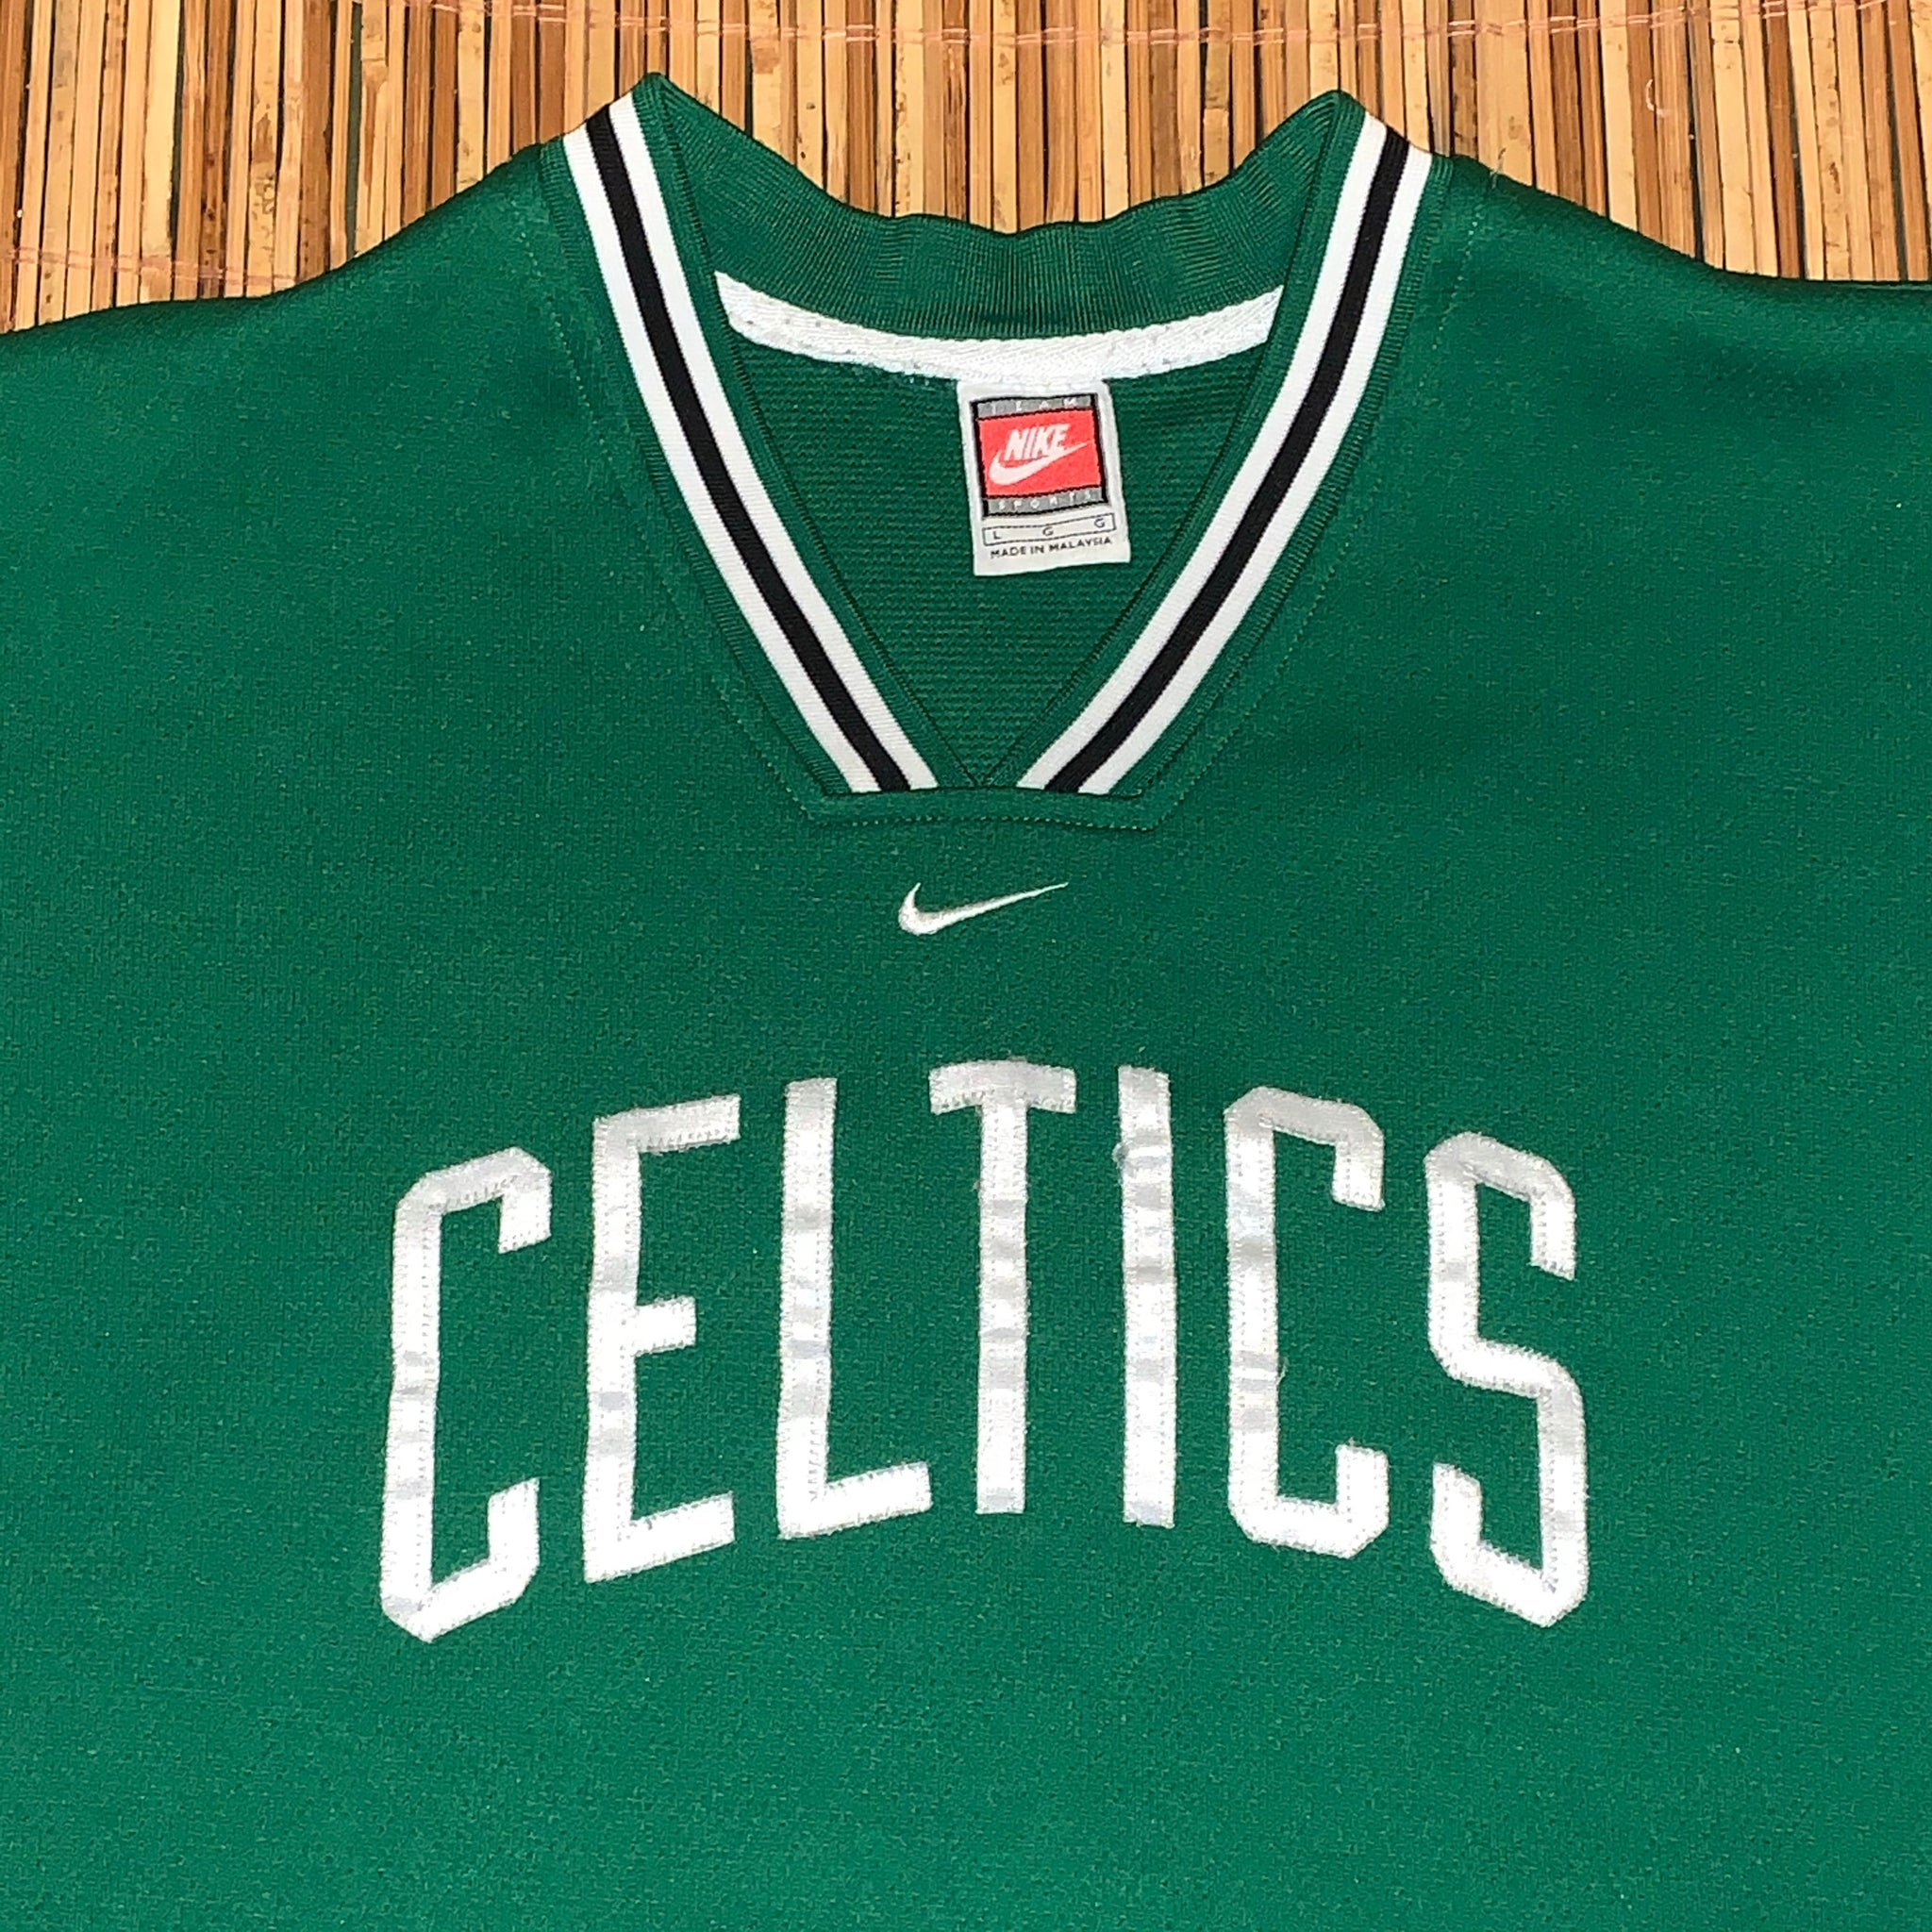 Boston Celtics Classic Edition Older Kids' Nike NBA Swingman Jersey. Nike LU